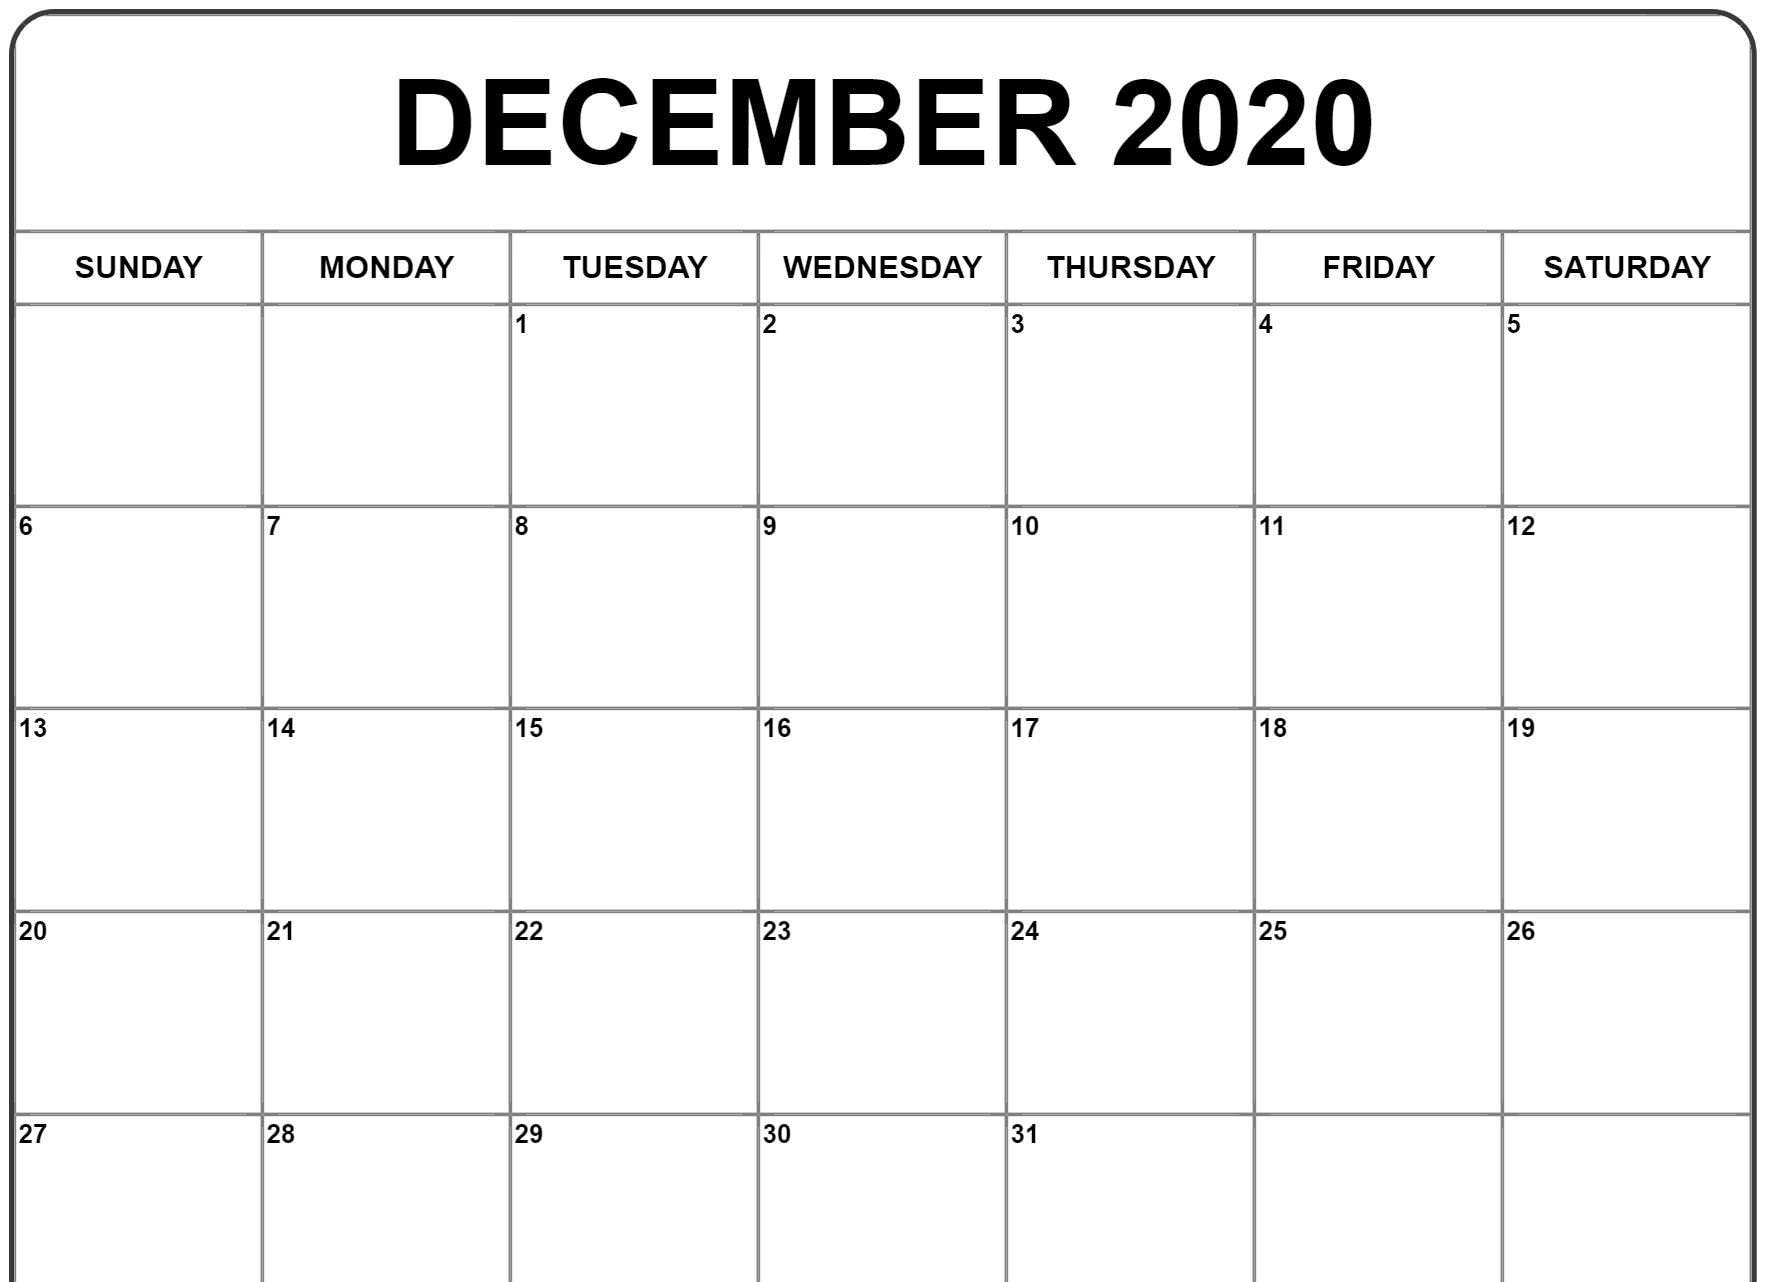 December 2020 Calendar PDF